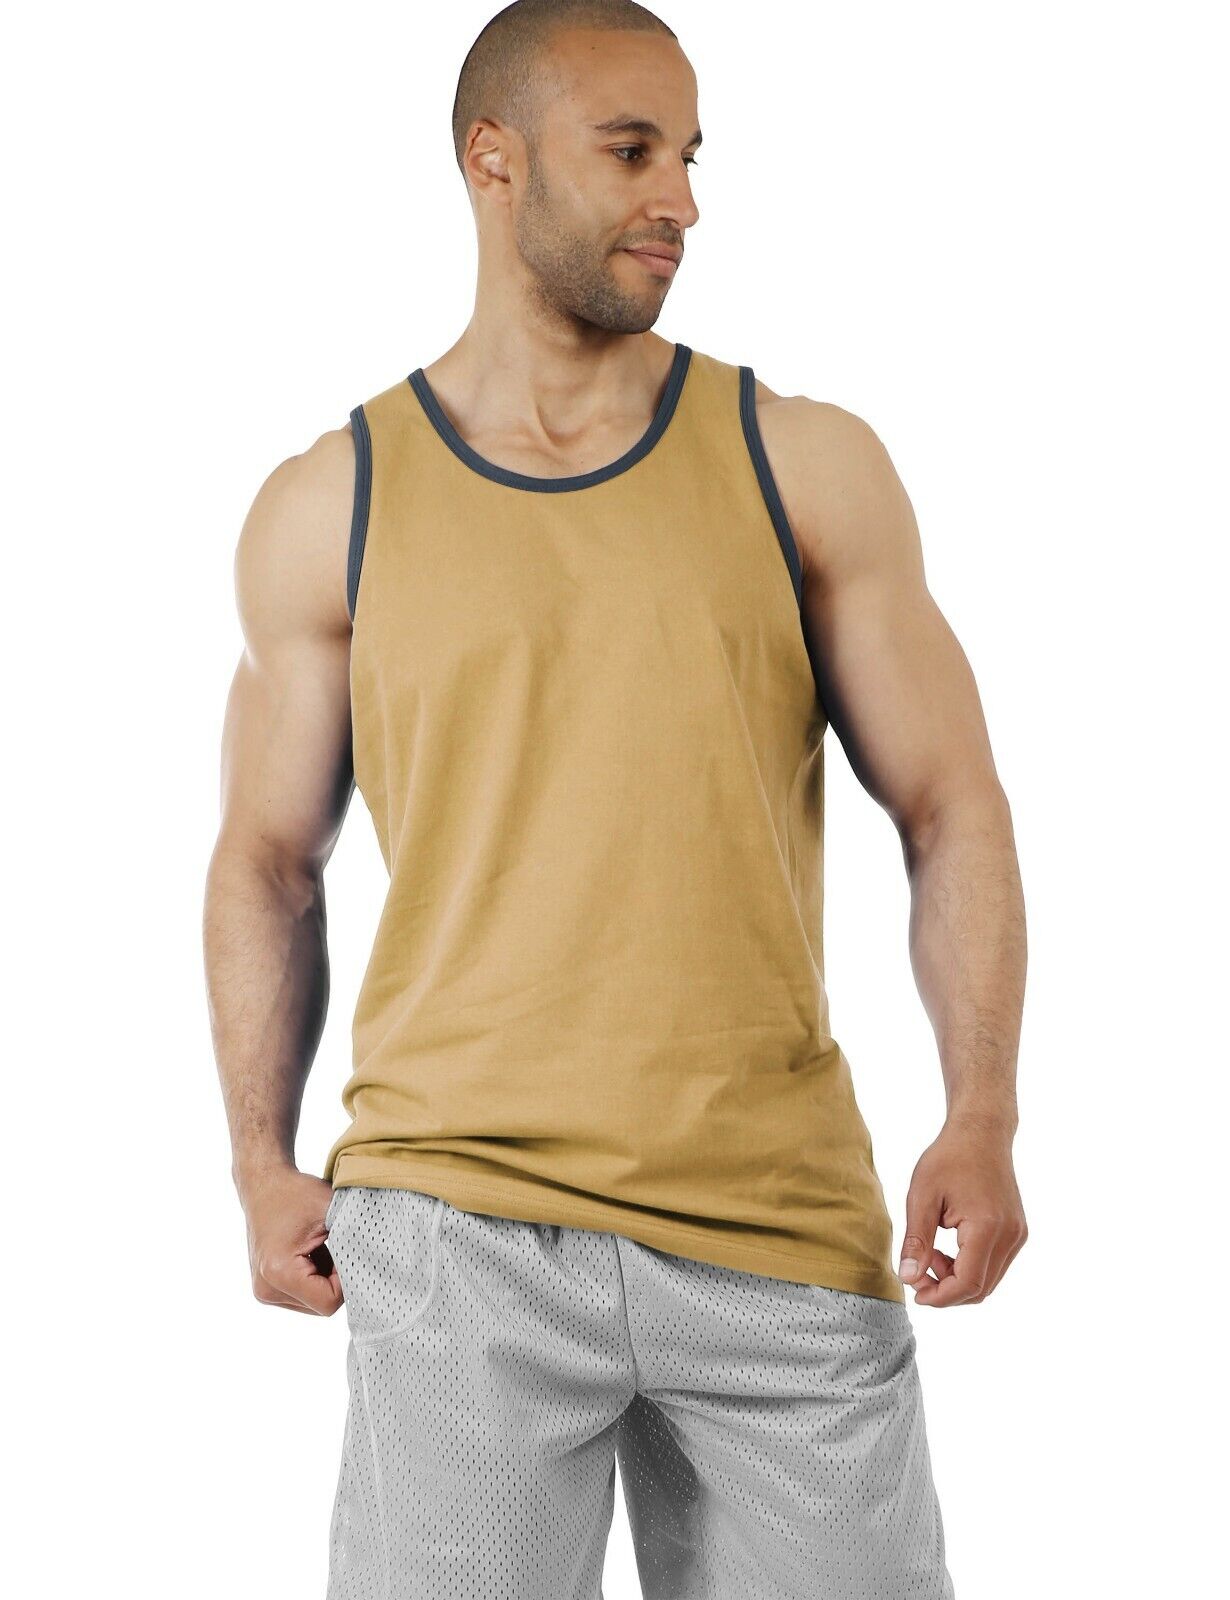 Men's Tank Top Muscle Gym Sleeveless Plain T-Shirts Tee A-Shirt 100%Cotton NEW